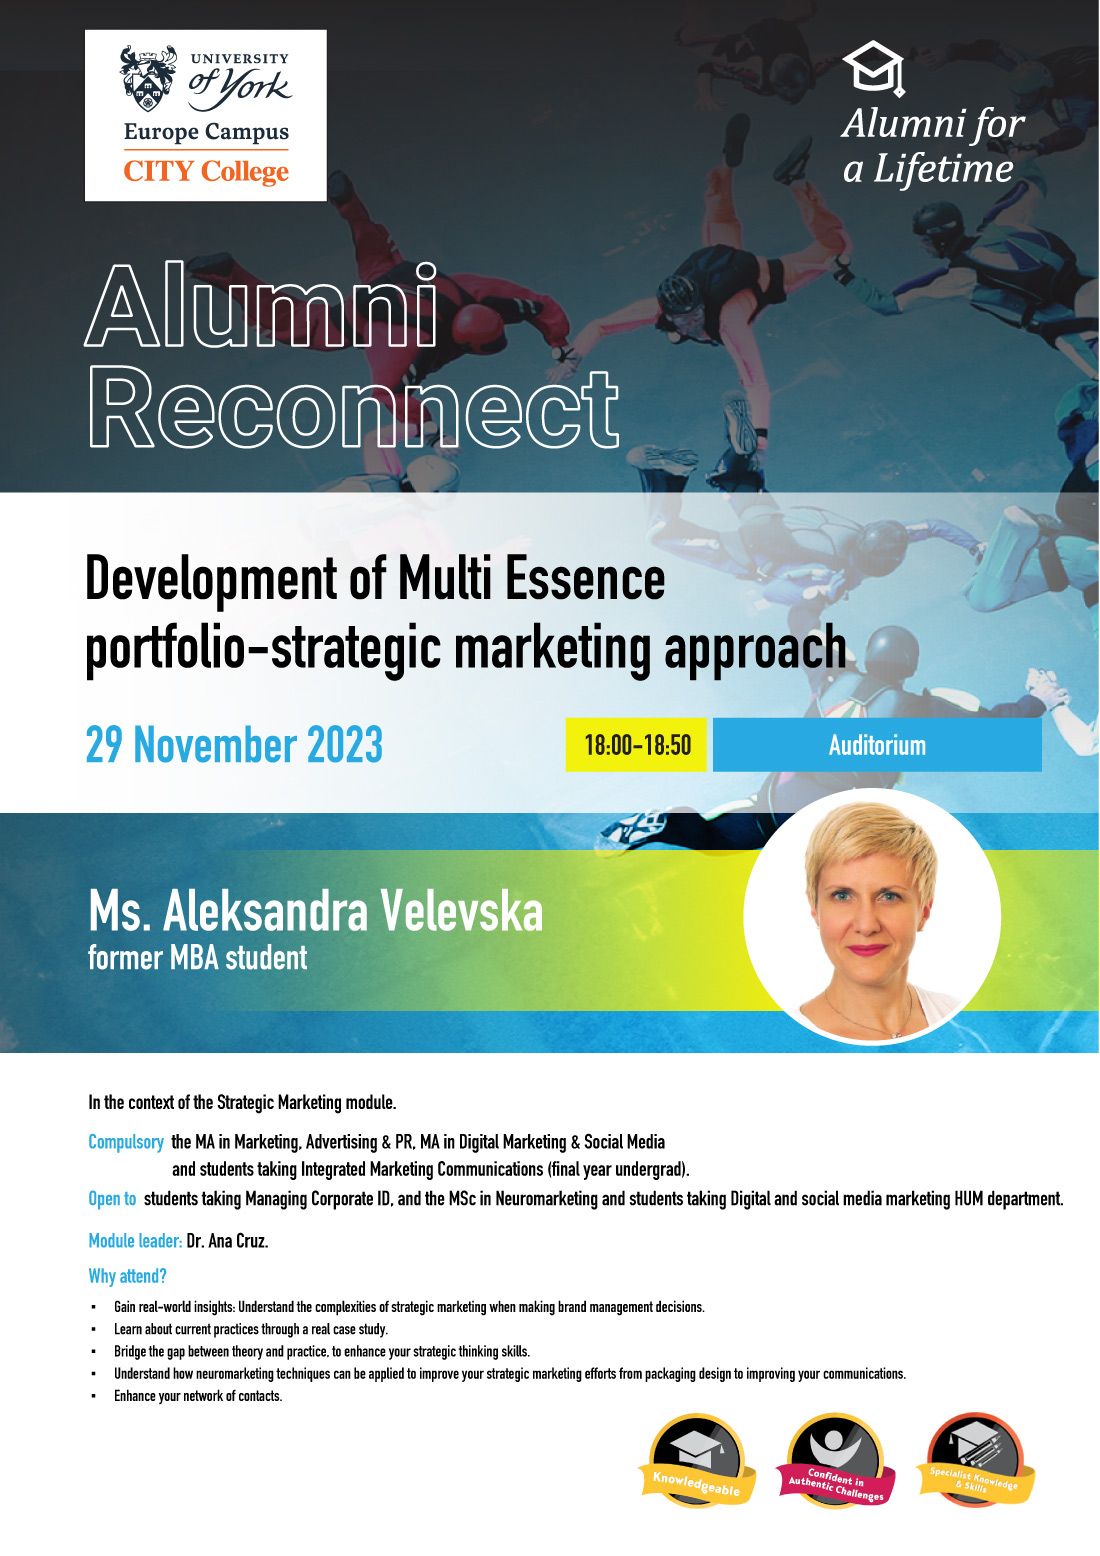 Alumni Reconnect talk by Ms Aleksandra Velevska